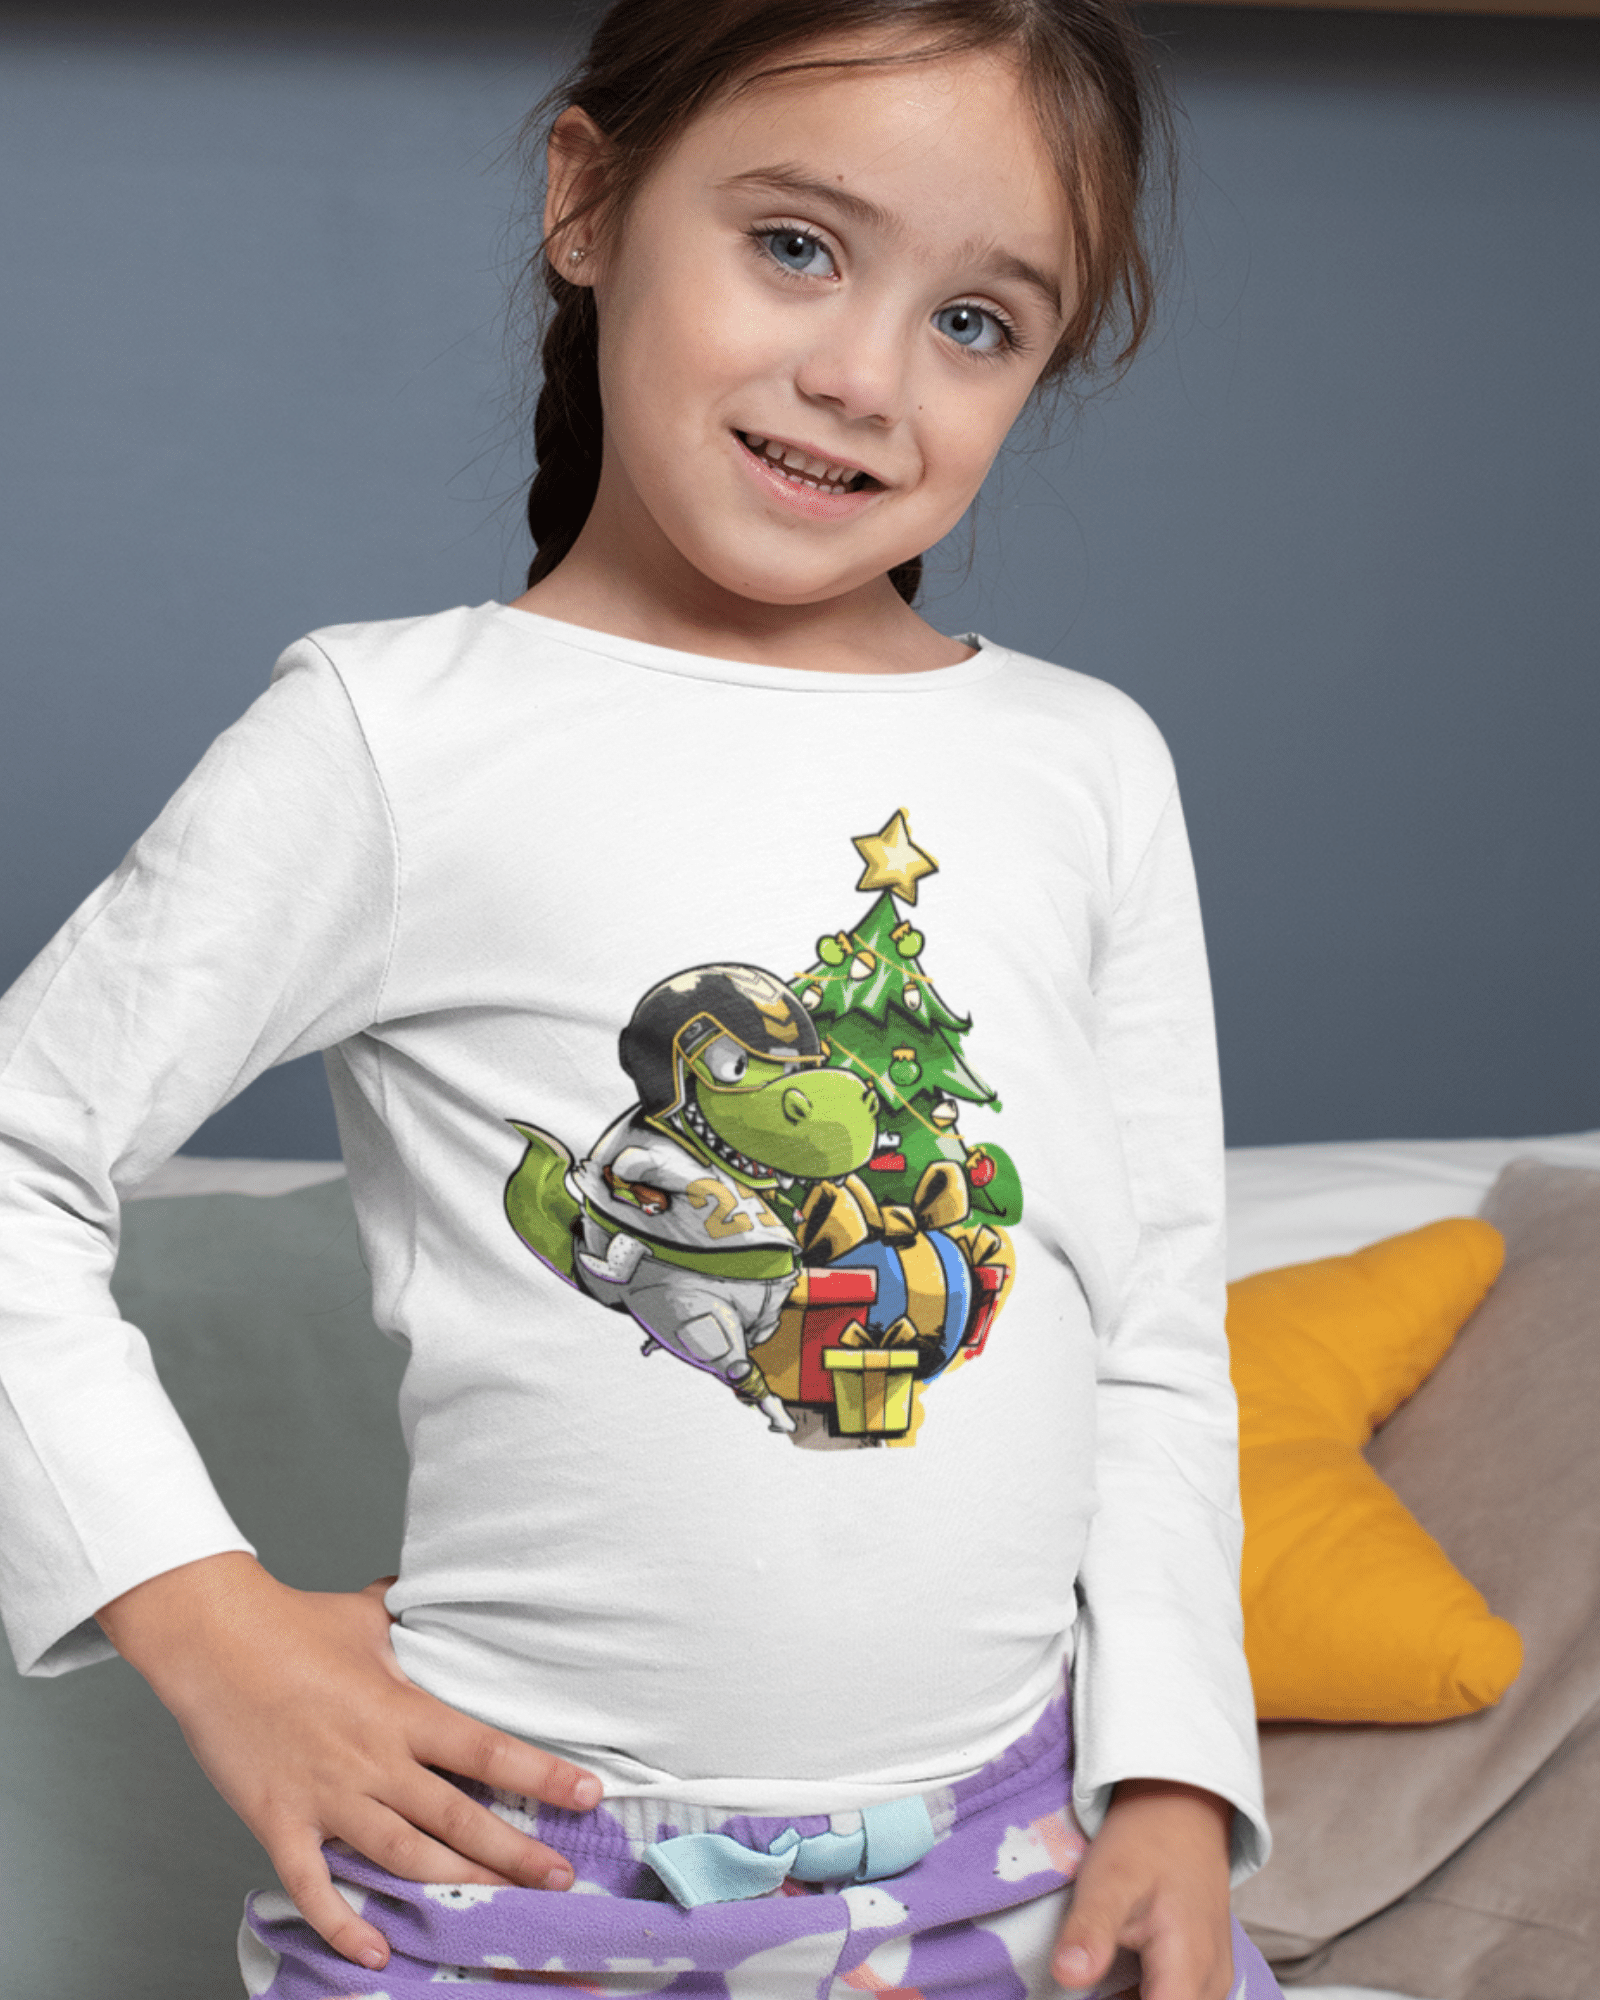 girl wearing a christmas football shirt with a dinosaur